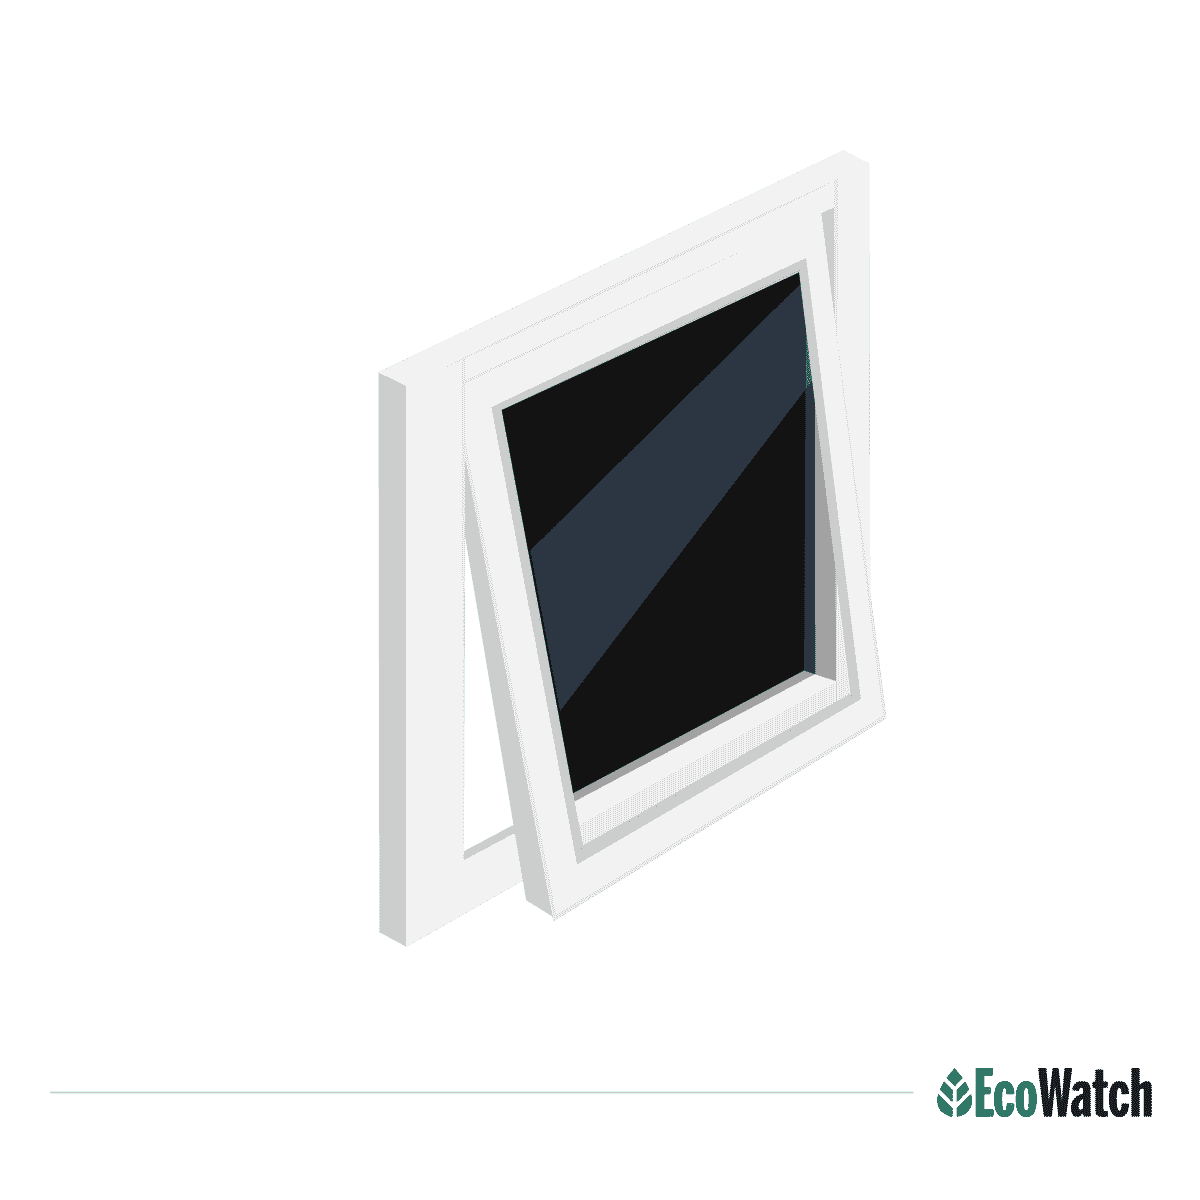 Awning Window type